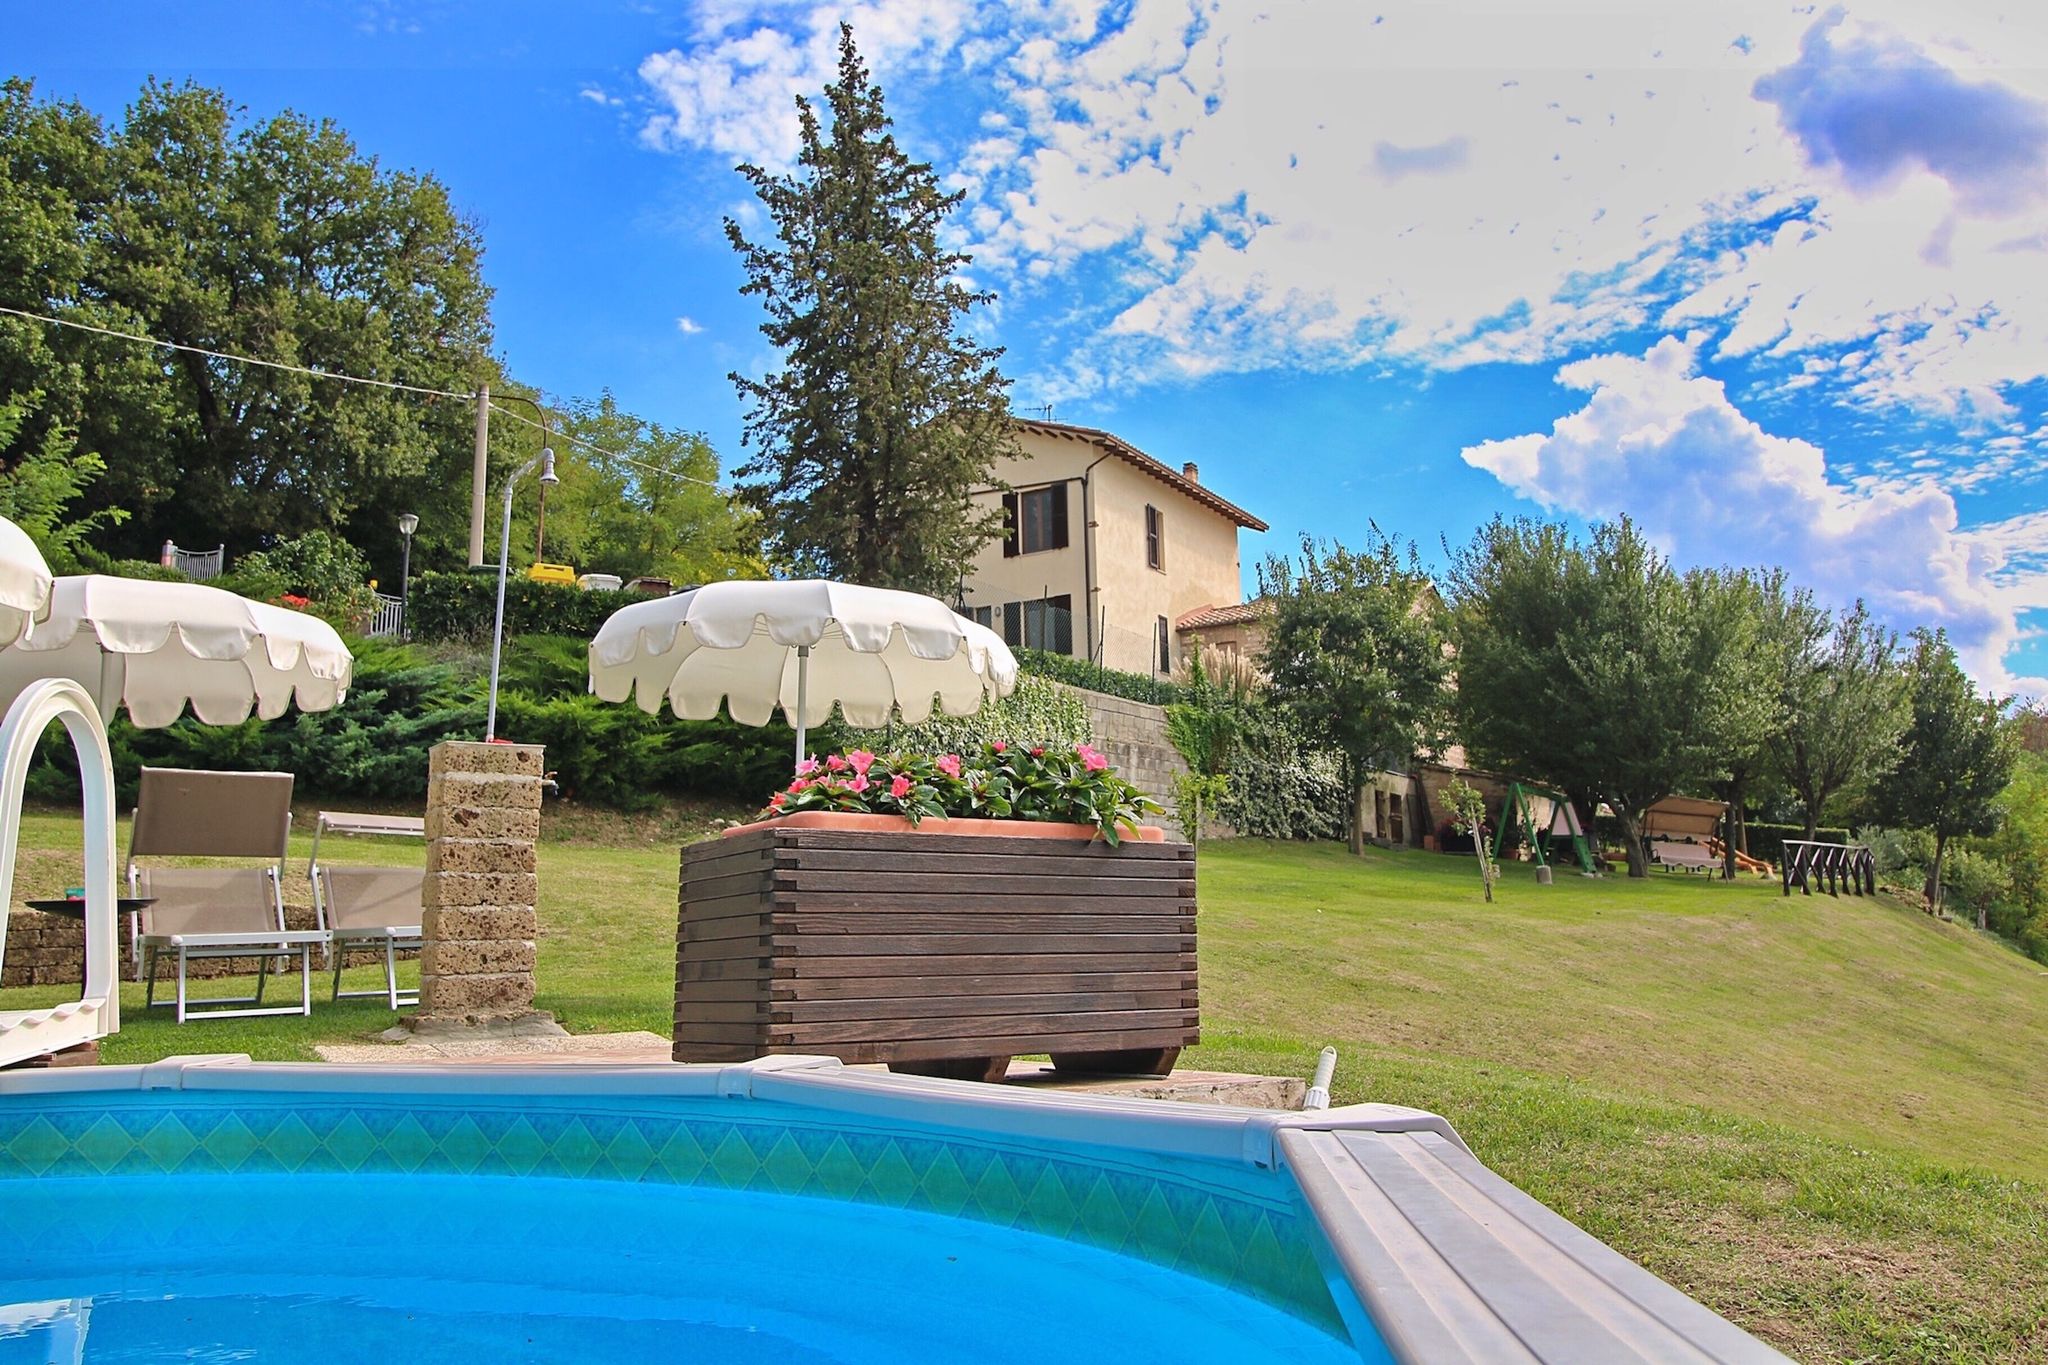 Villa in Piticchio with Swimming Pool, Garden, BBQ, Terrace